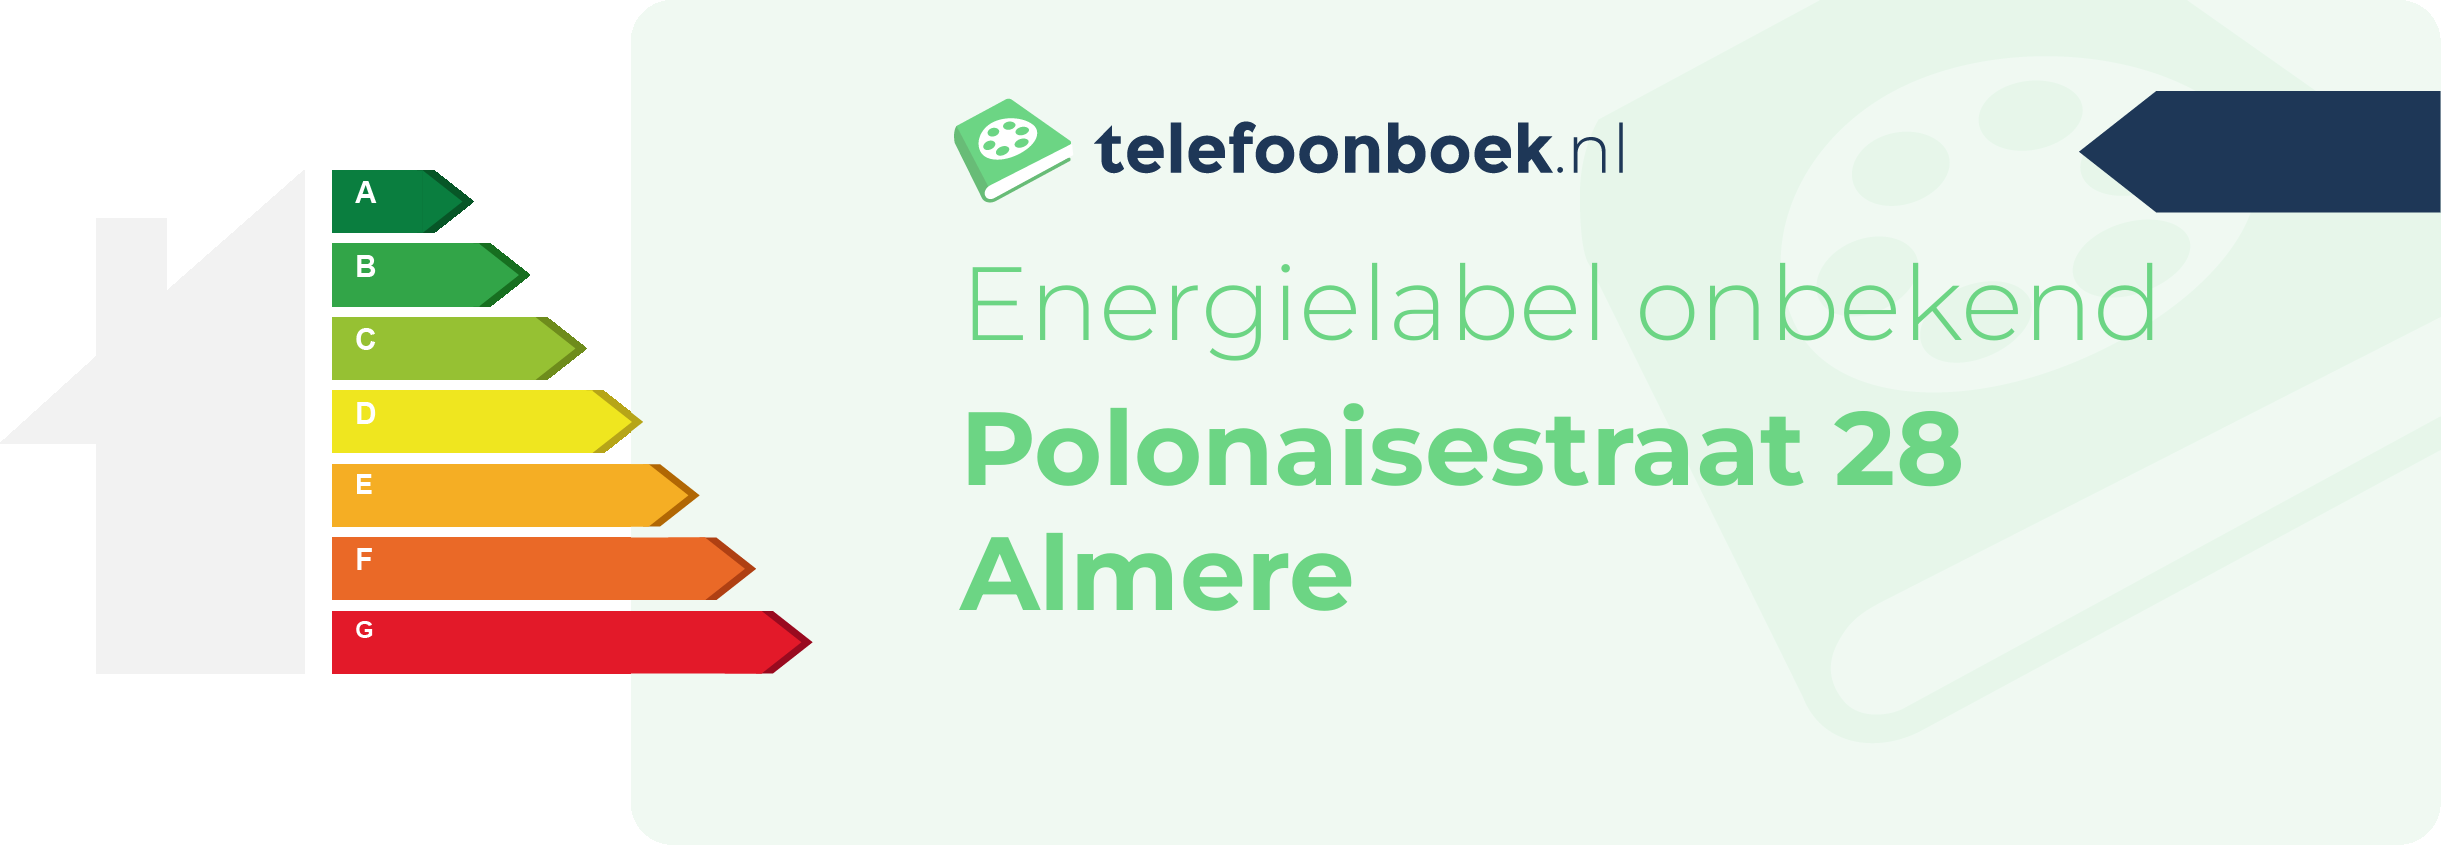 Energielabel Polonaisestraat 28 Almere